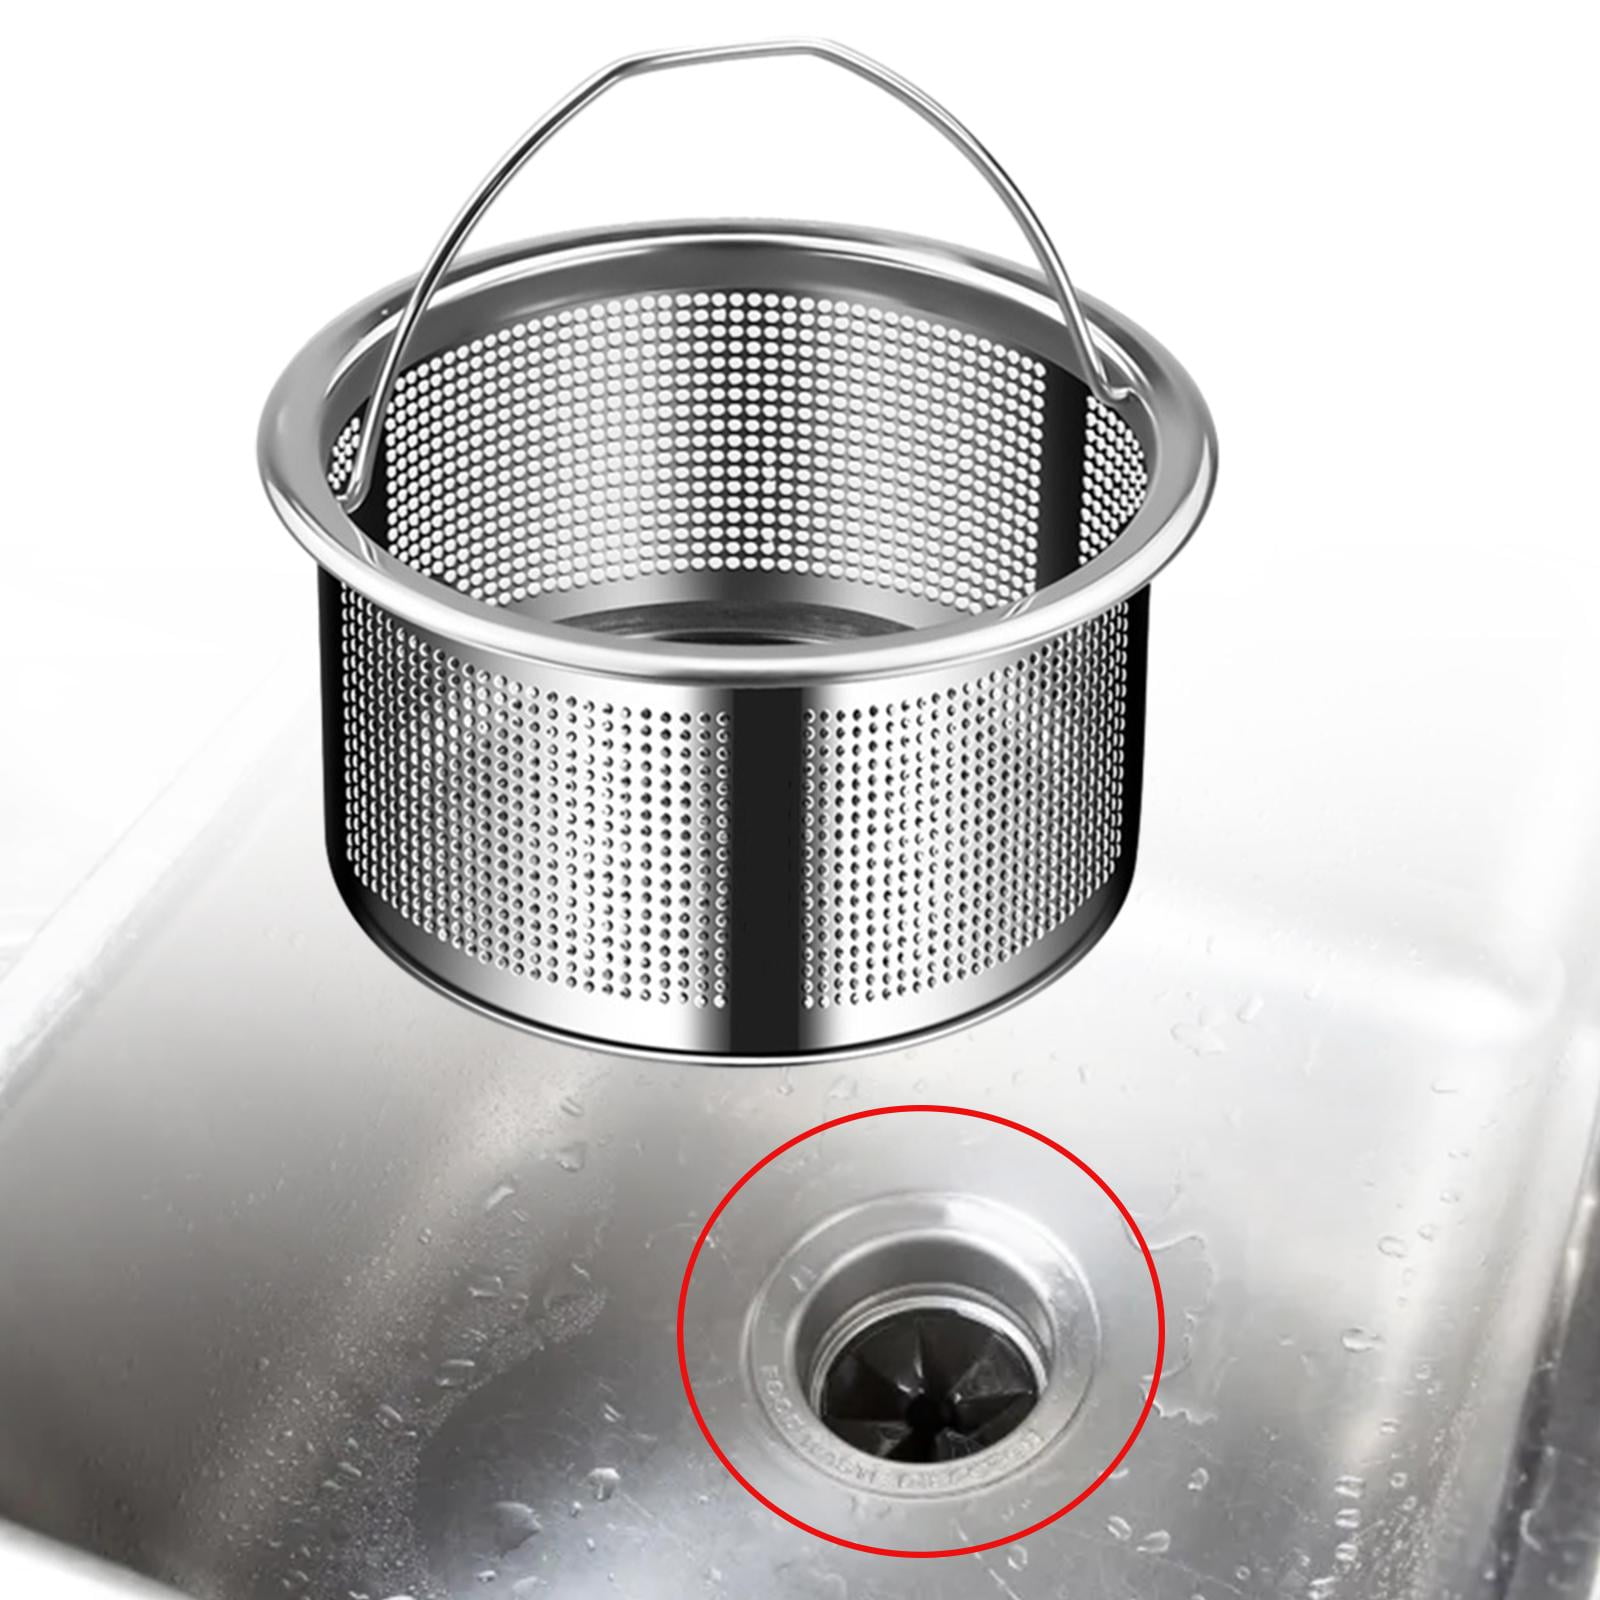 Handy Housewares 4.25 Stainless Steel Mesh Kitchen Sink Strainer - Drain Food Stopper Basket